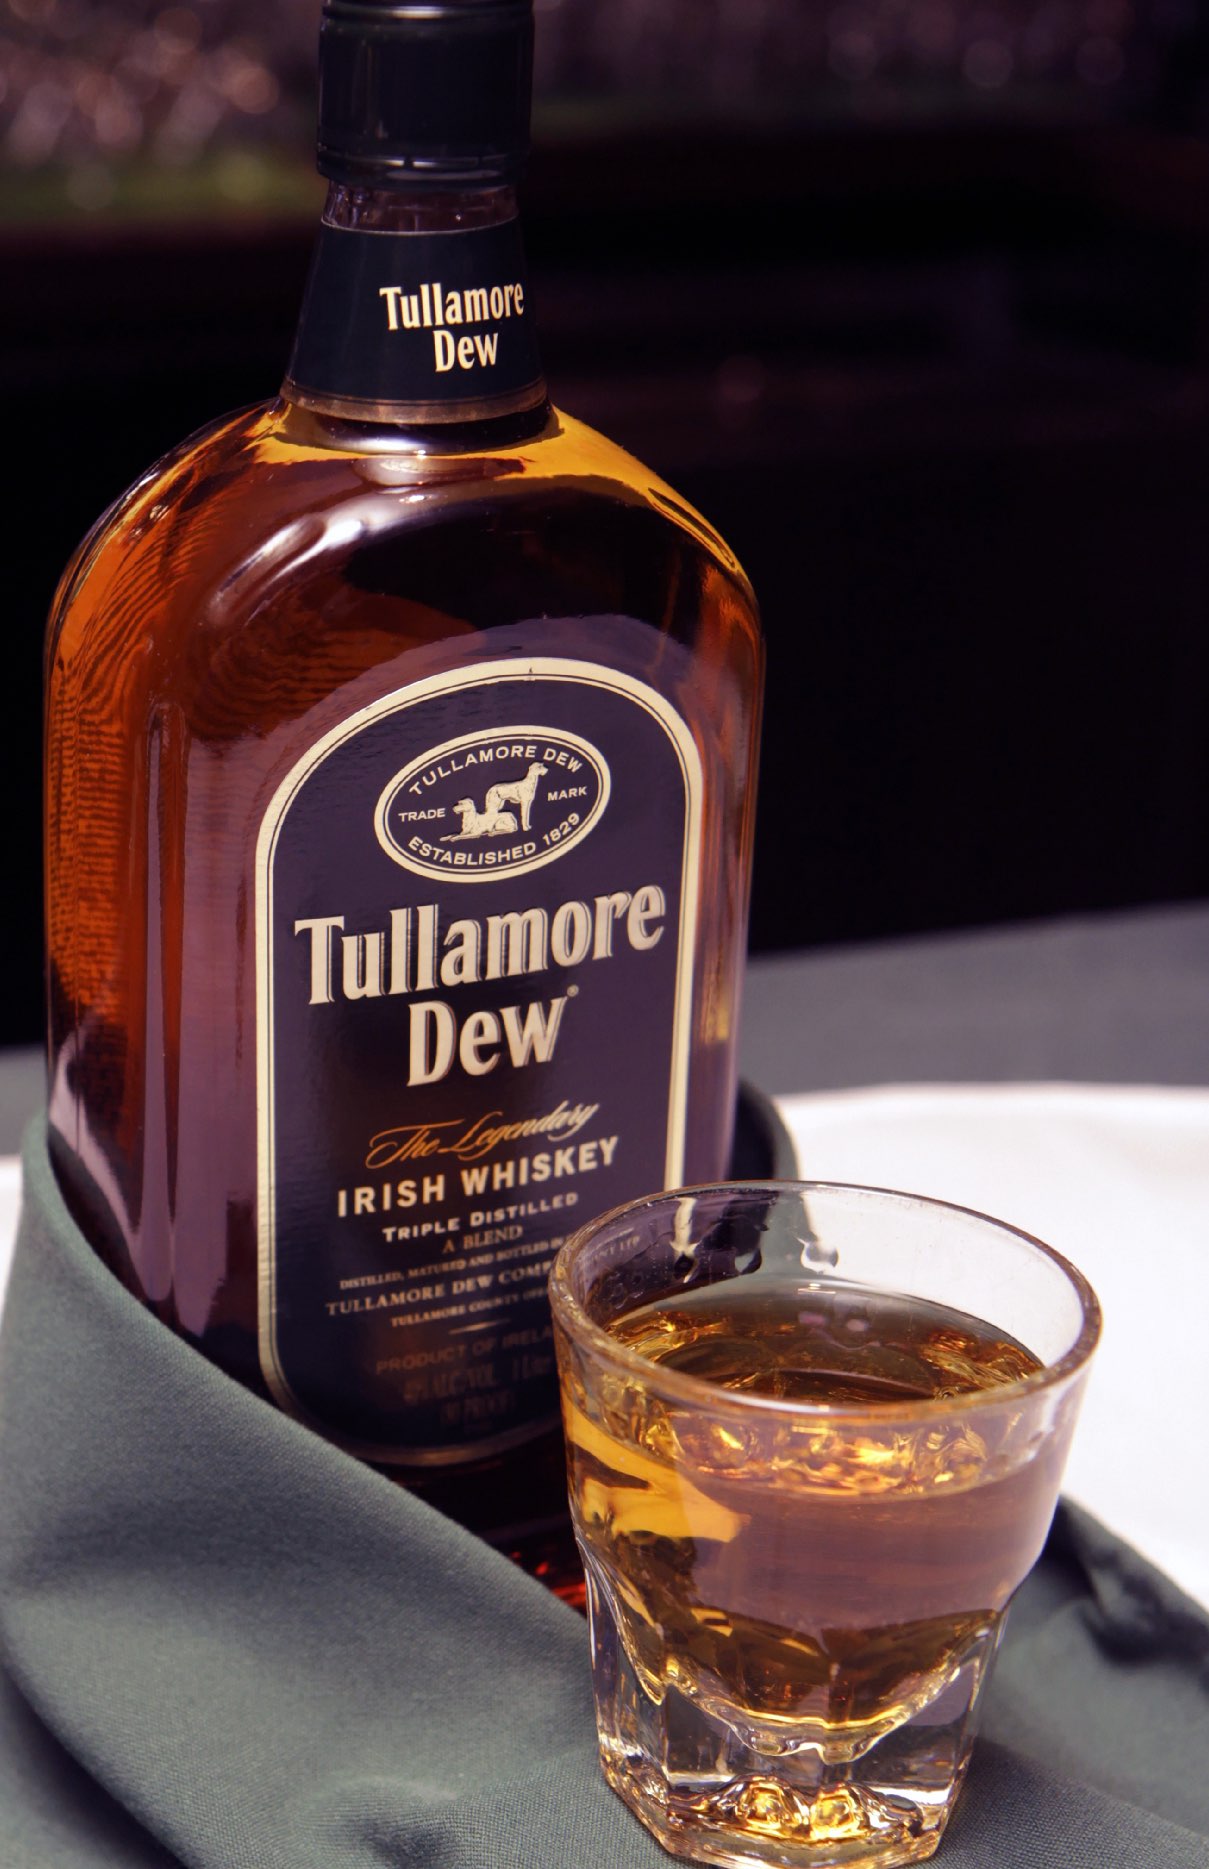 A bottle of Tullamore Dew at Crogan's